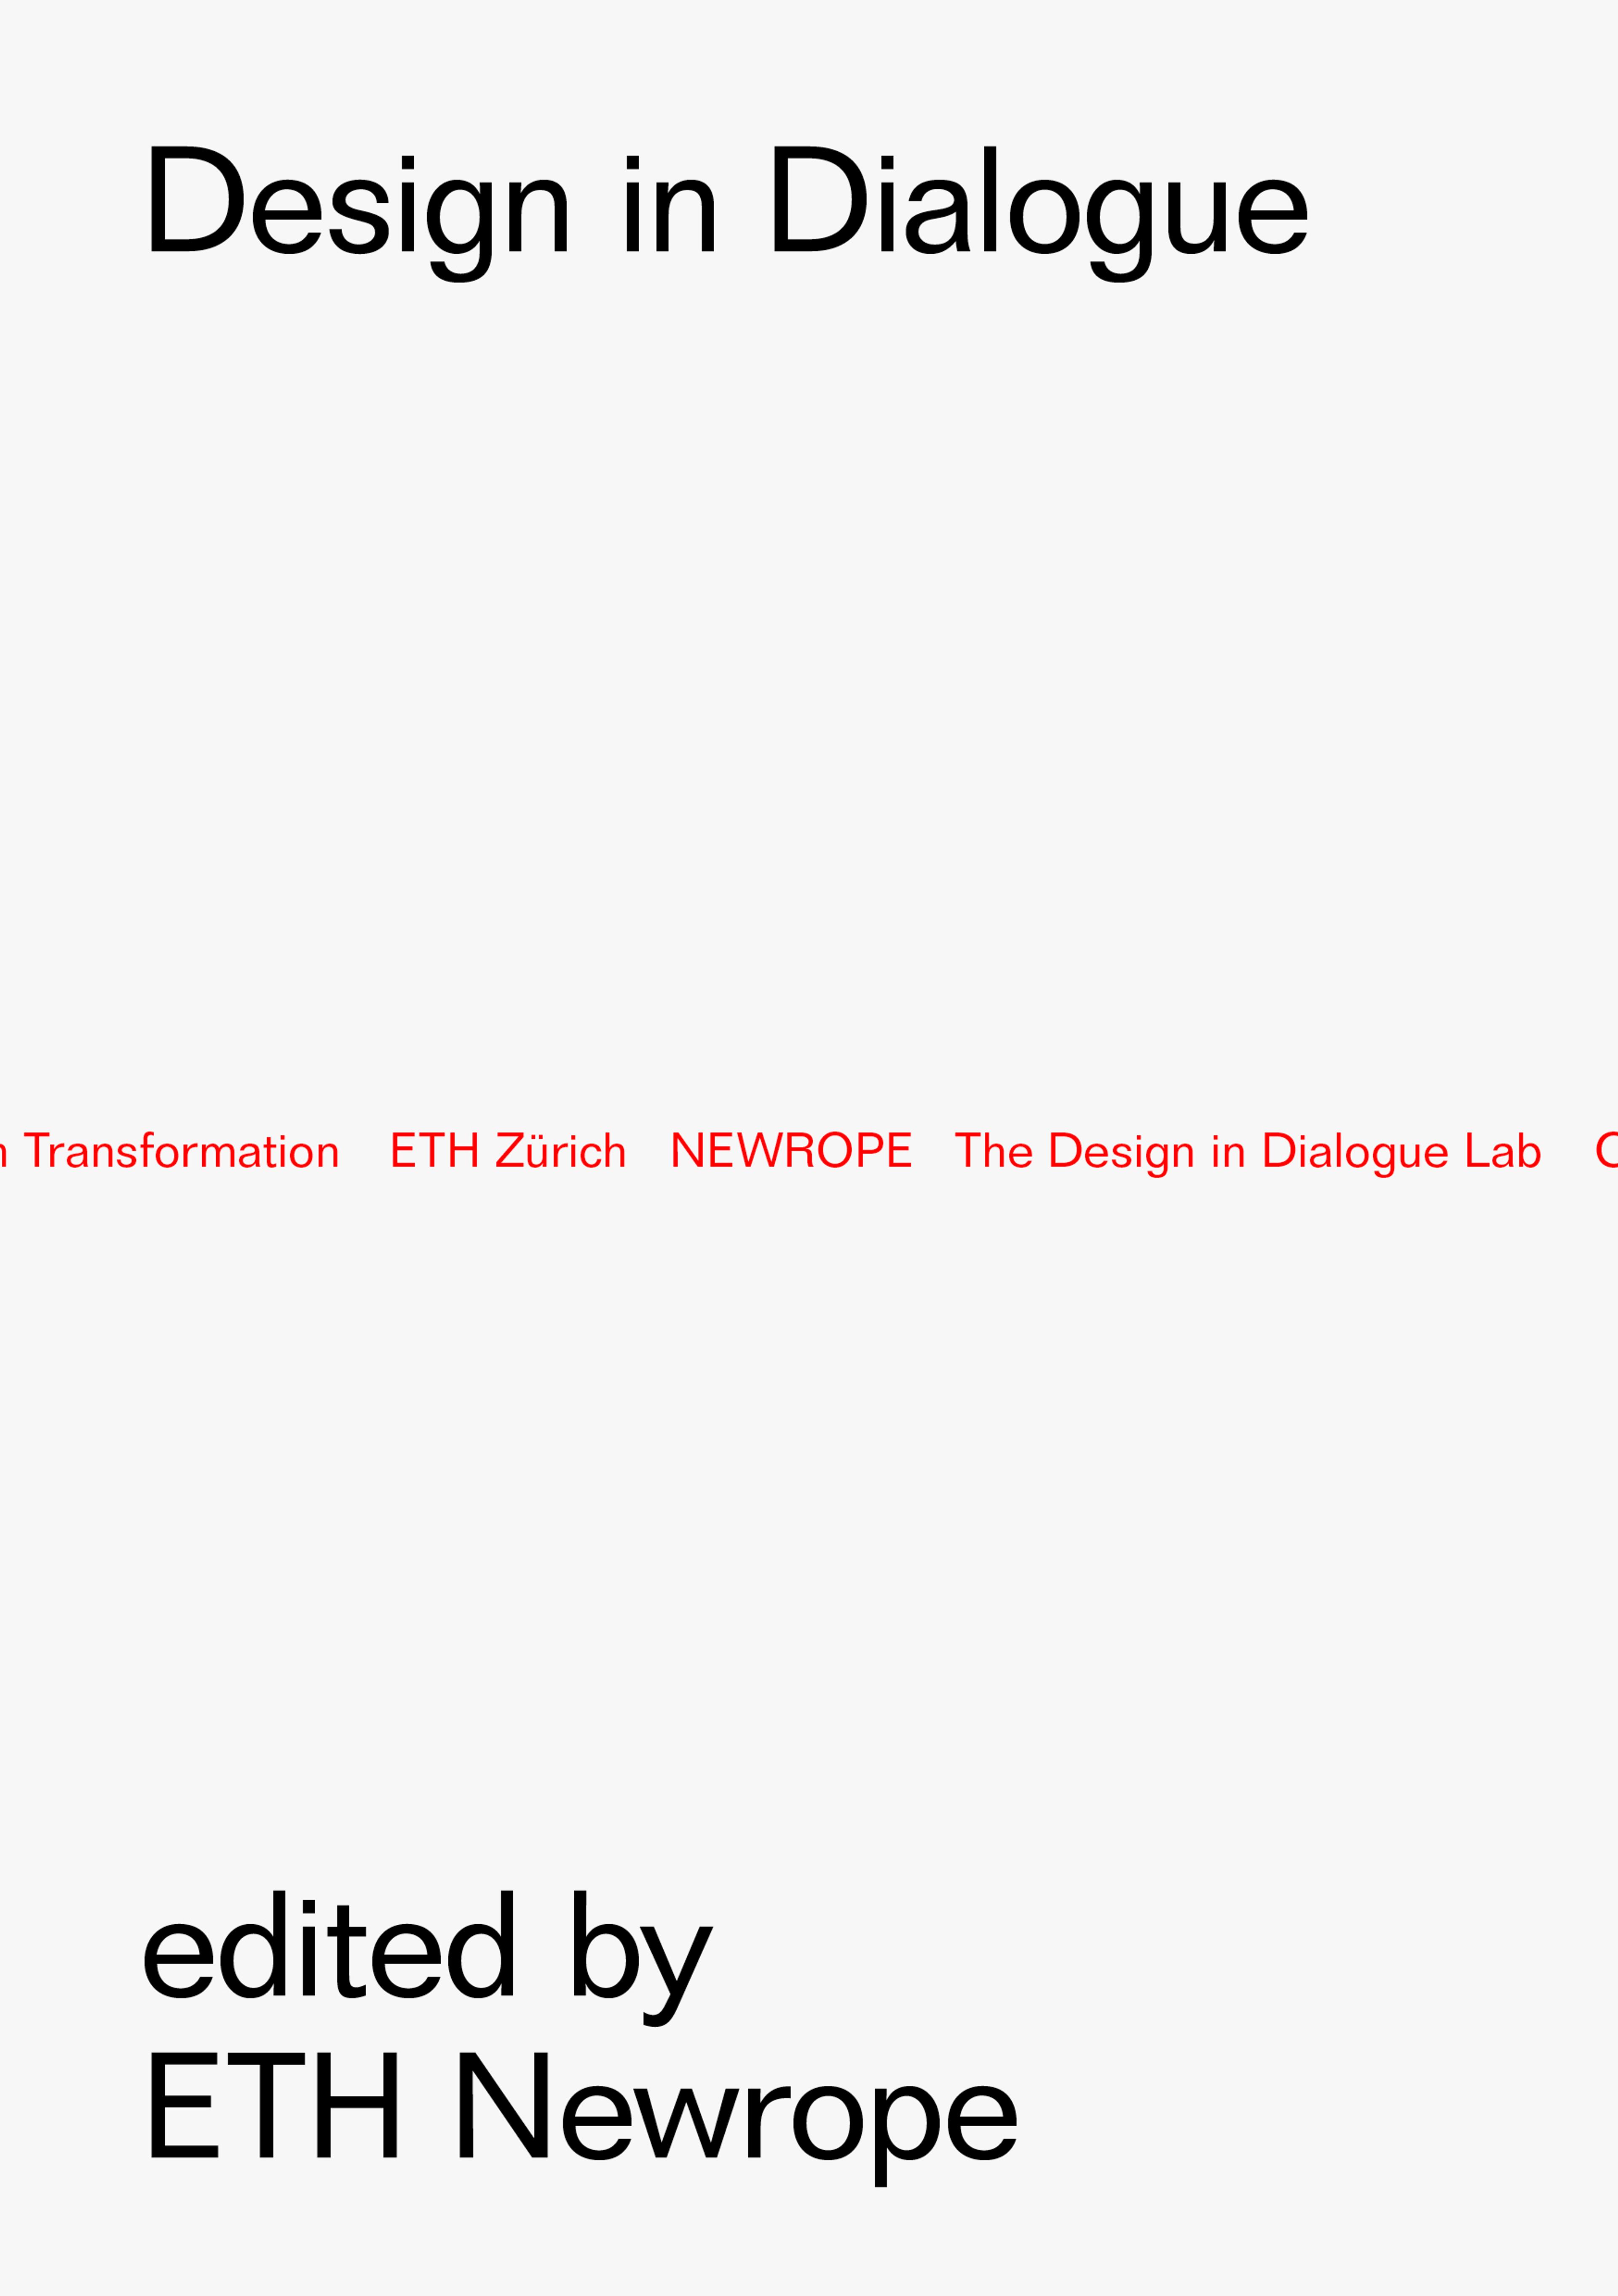 Publication: "Design in Dialogue"